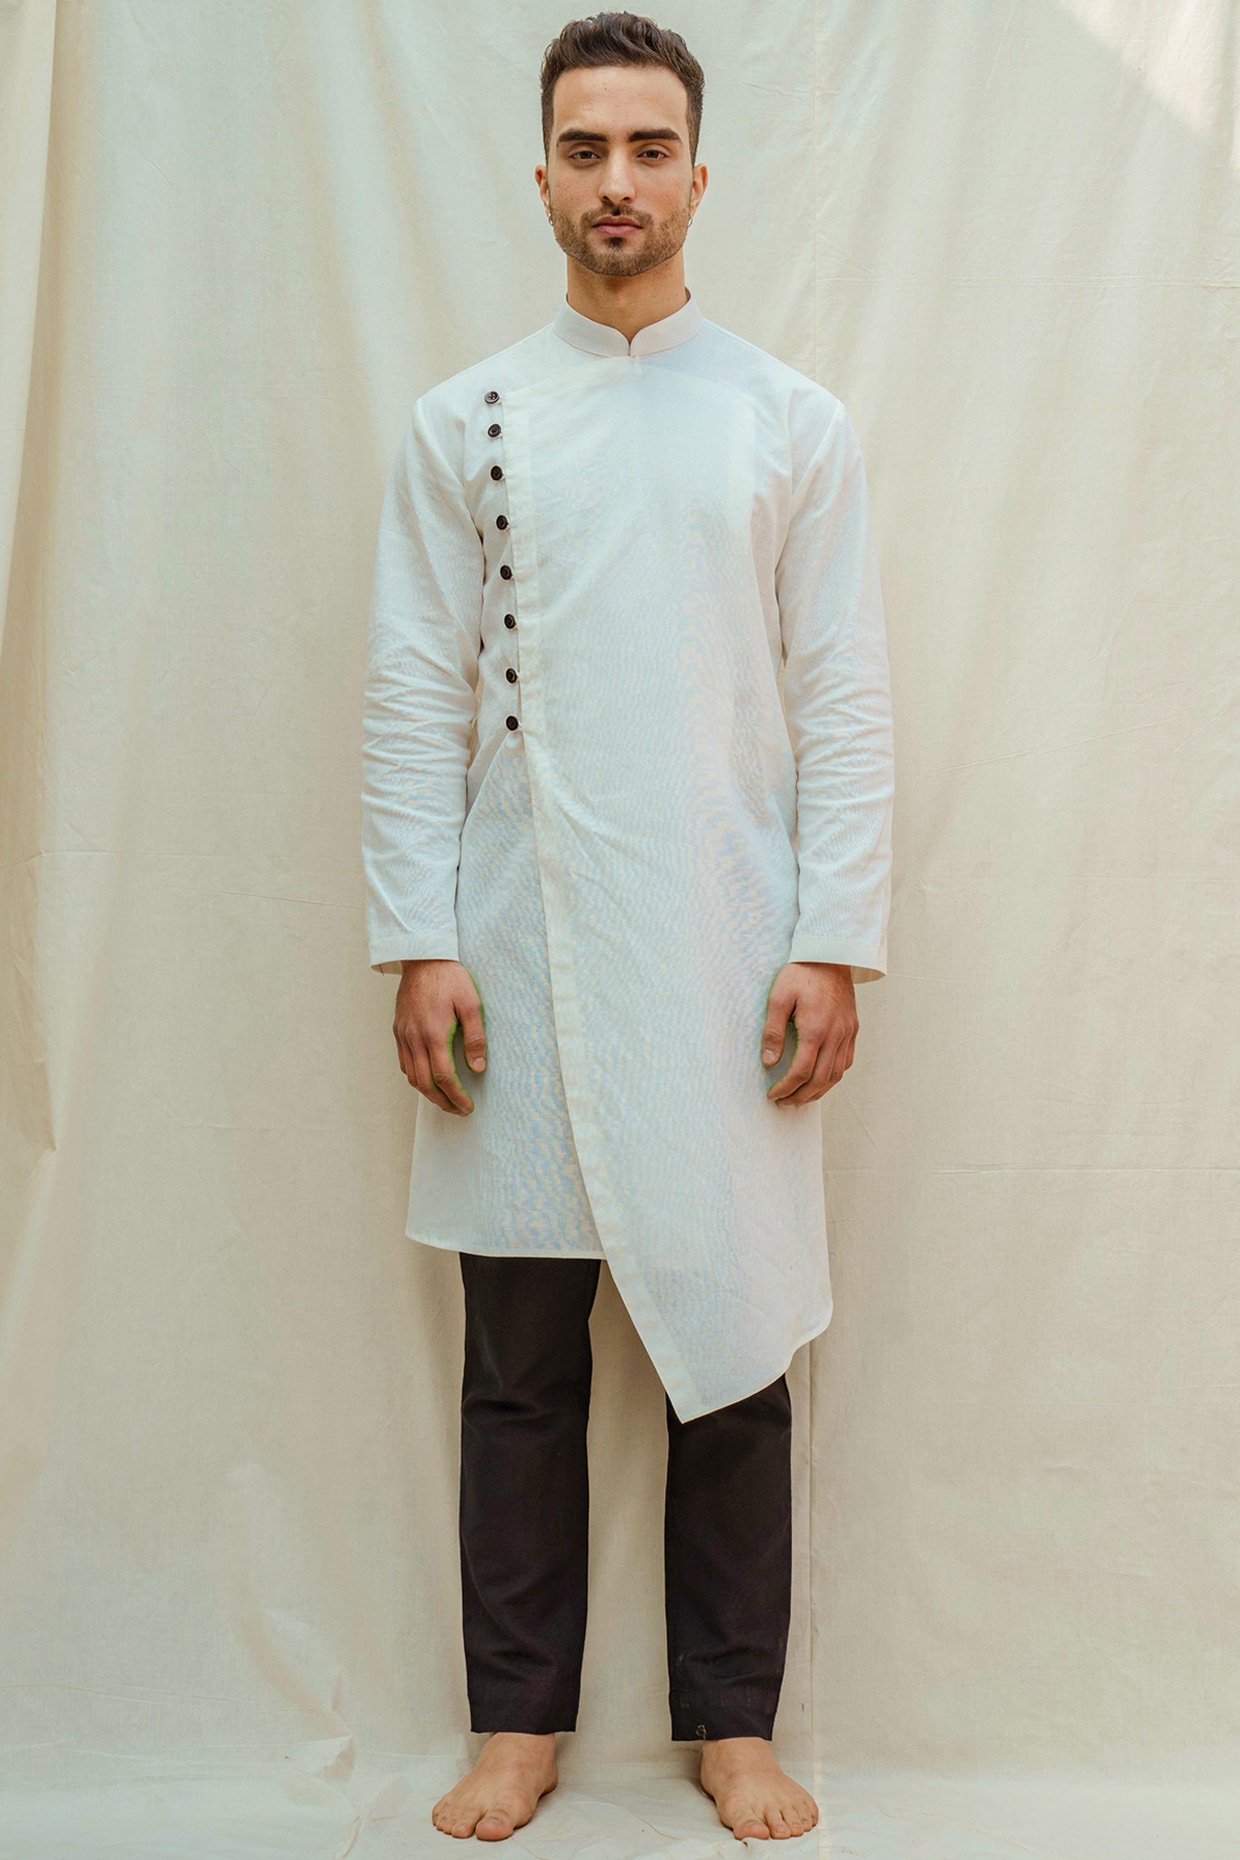 White Cotton Kurta Men Indian Clothing Fashion Shirt Embroidered Men Kurta  | eBay